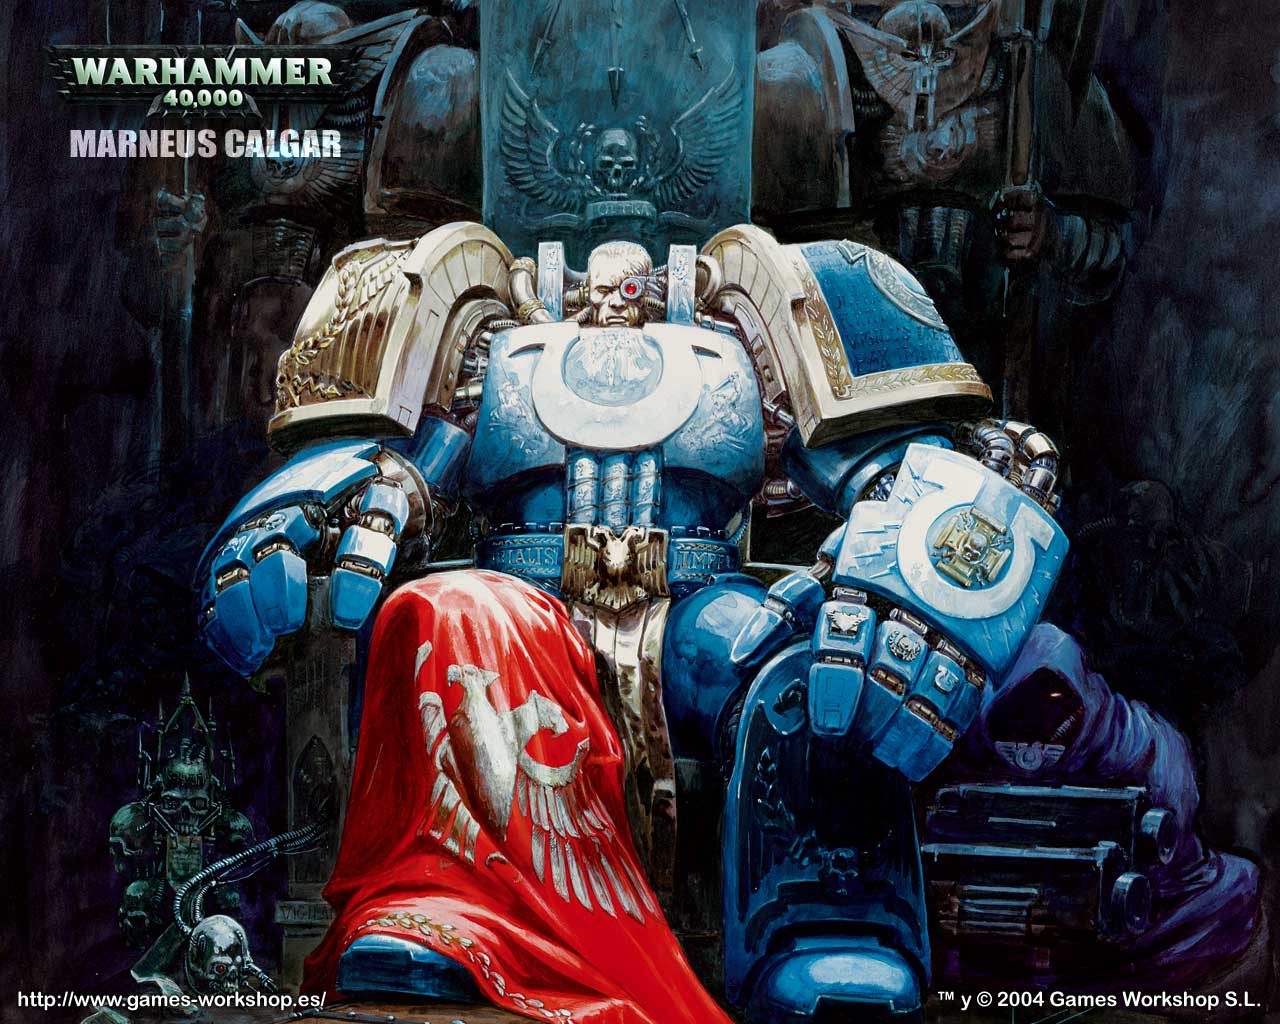 warhammer 40k, warhammer, space marine, video game, marneus calgar HD wallpaper